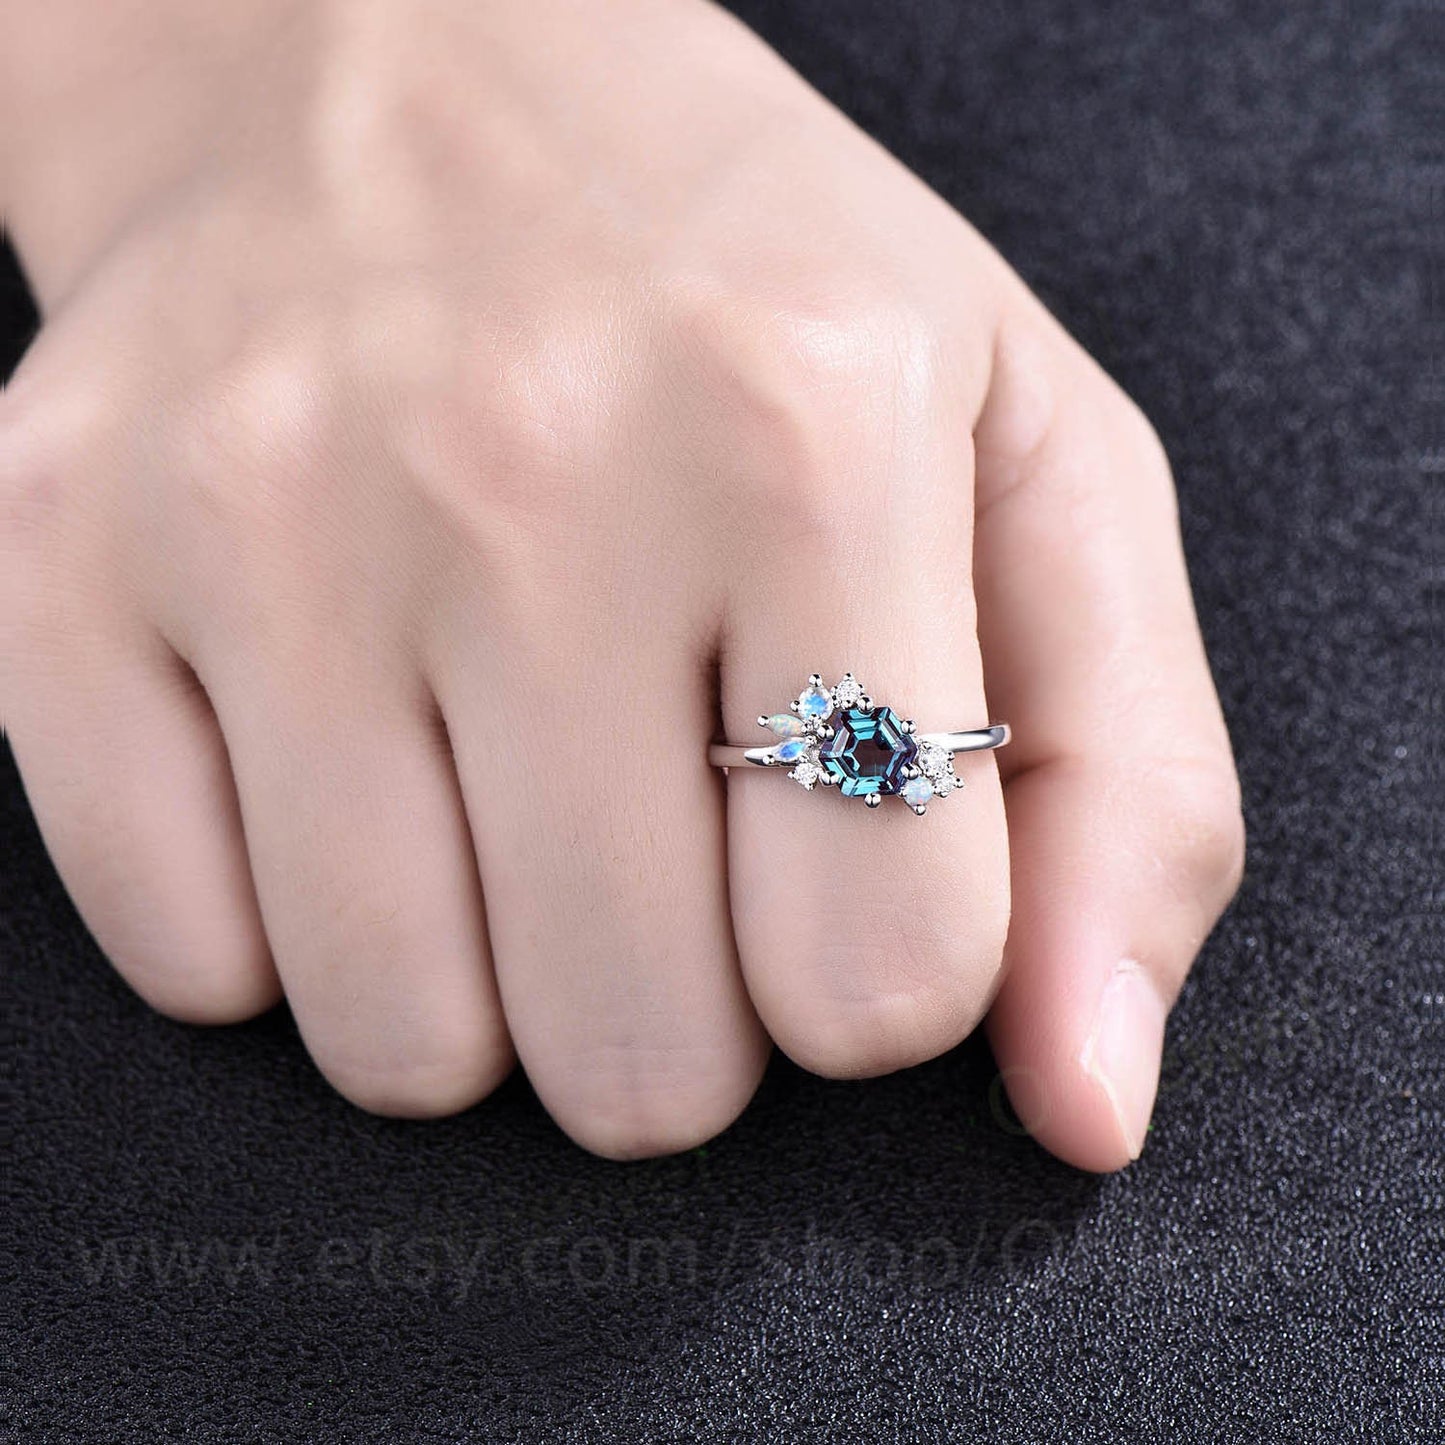 Hexagon cut Alexandrite engagement ring 14k rose gold marquise cut moonstone opal ring vintage diamond wedding anniversary ring women gift